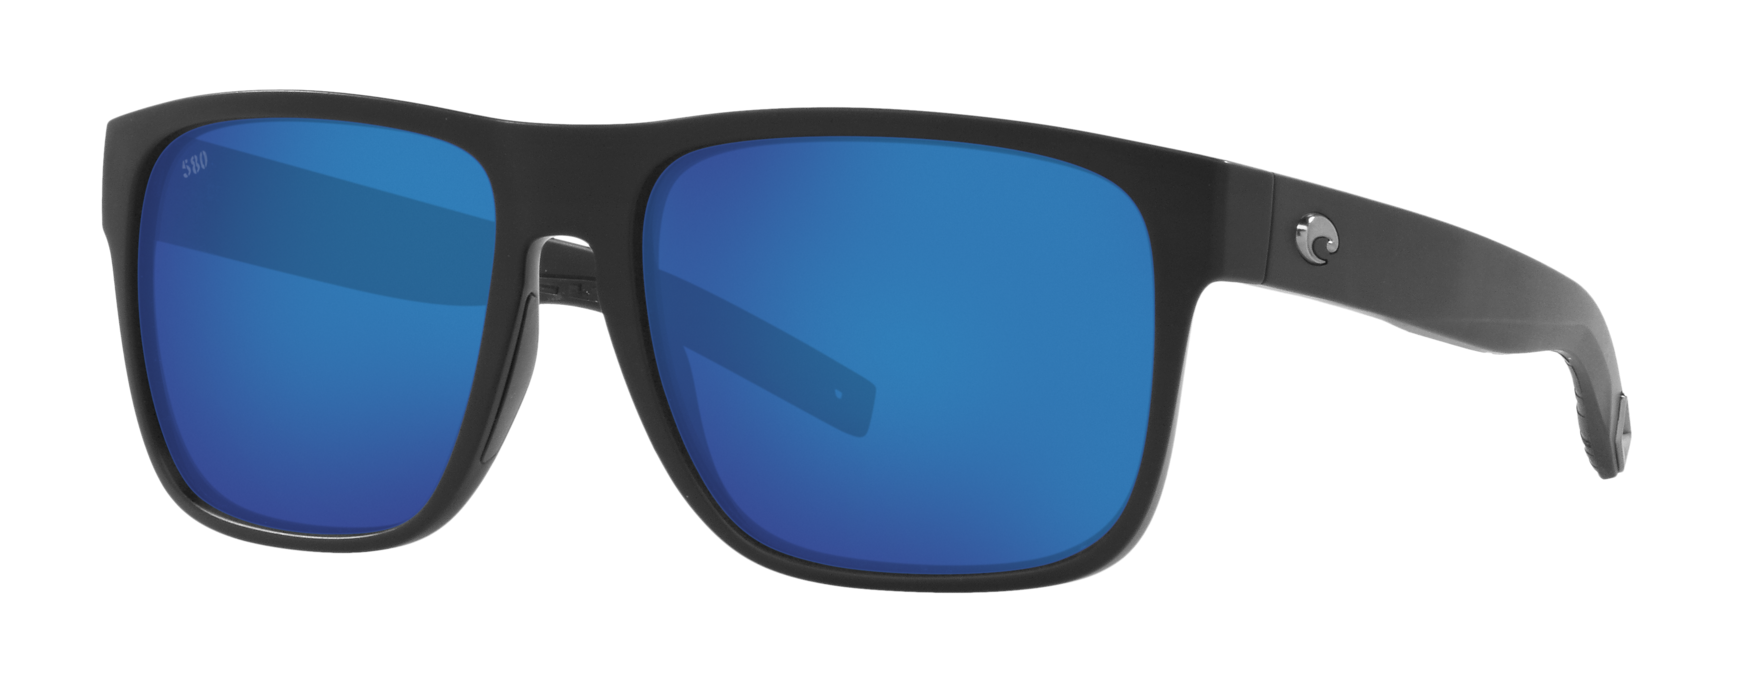 costa spearo xl sunglasses in matte black with blue mirror 580 lenses